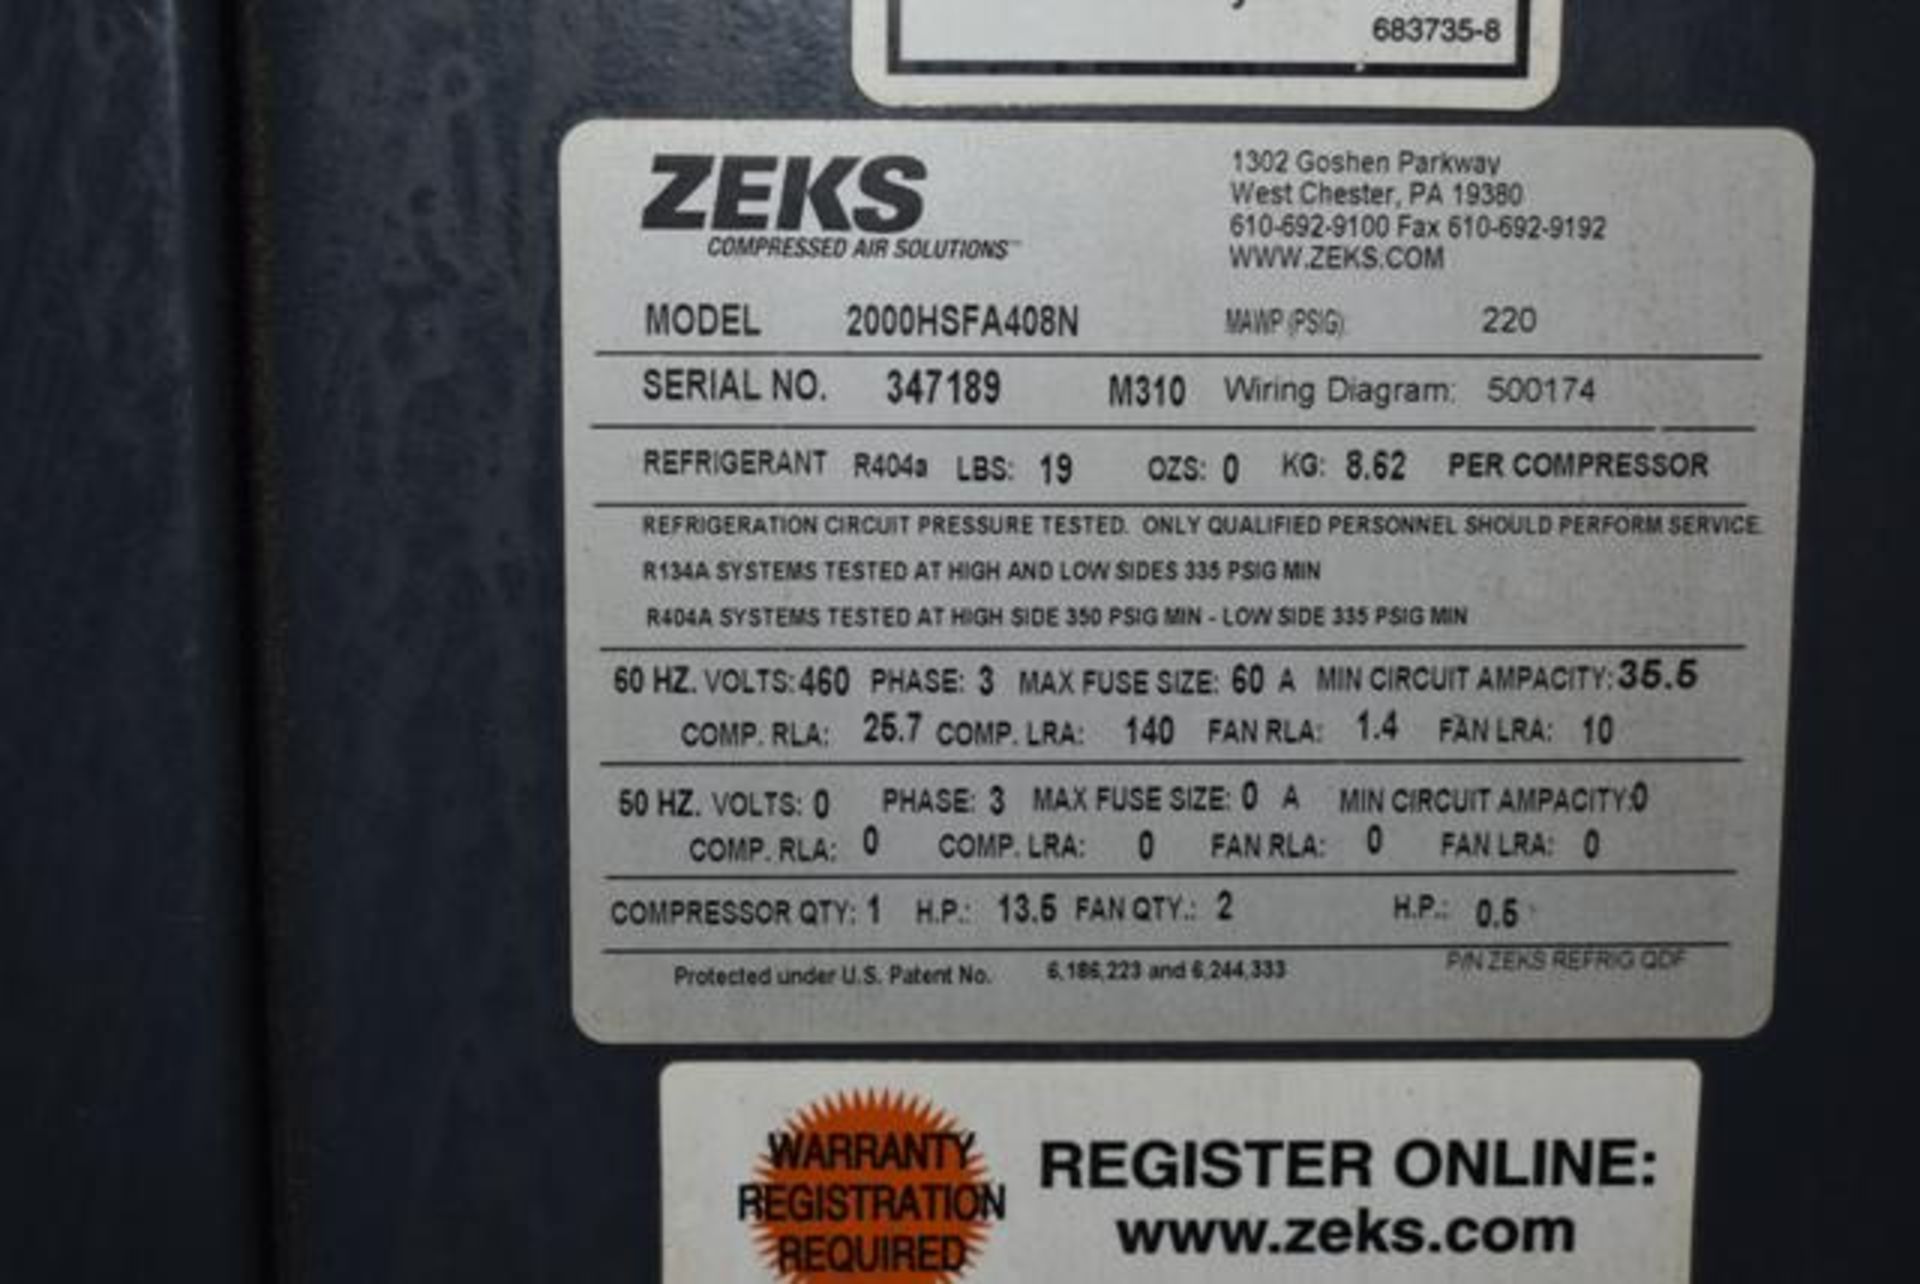 ZEKS Heat Sink Model #2000HSFA408N Refrigerated Air Dryer, SN 347189 - Image 2 of 3